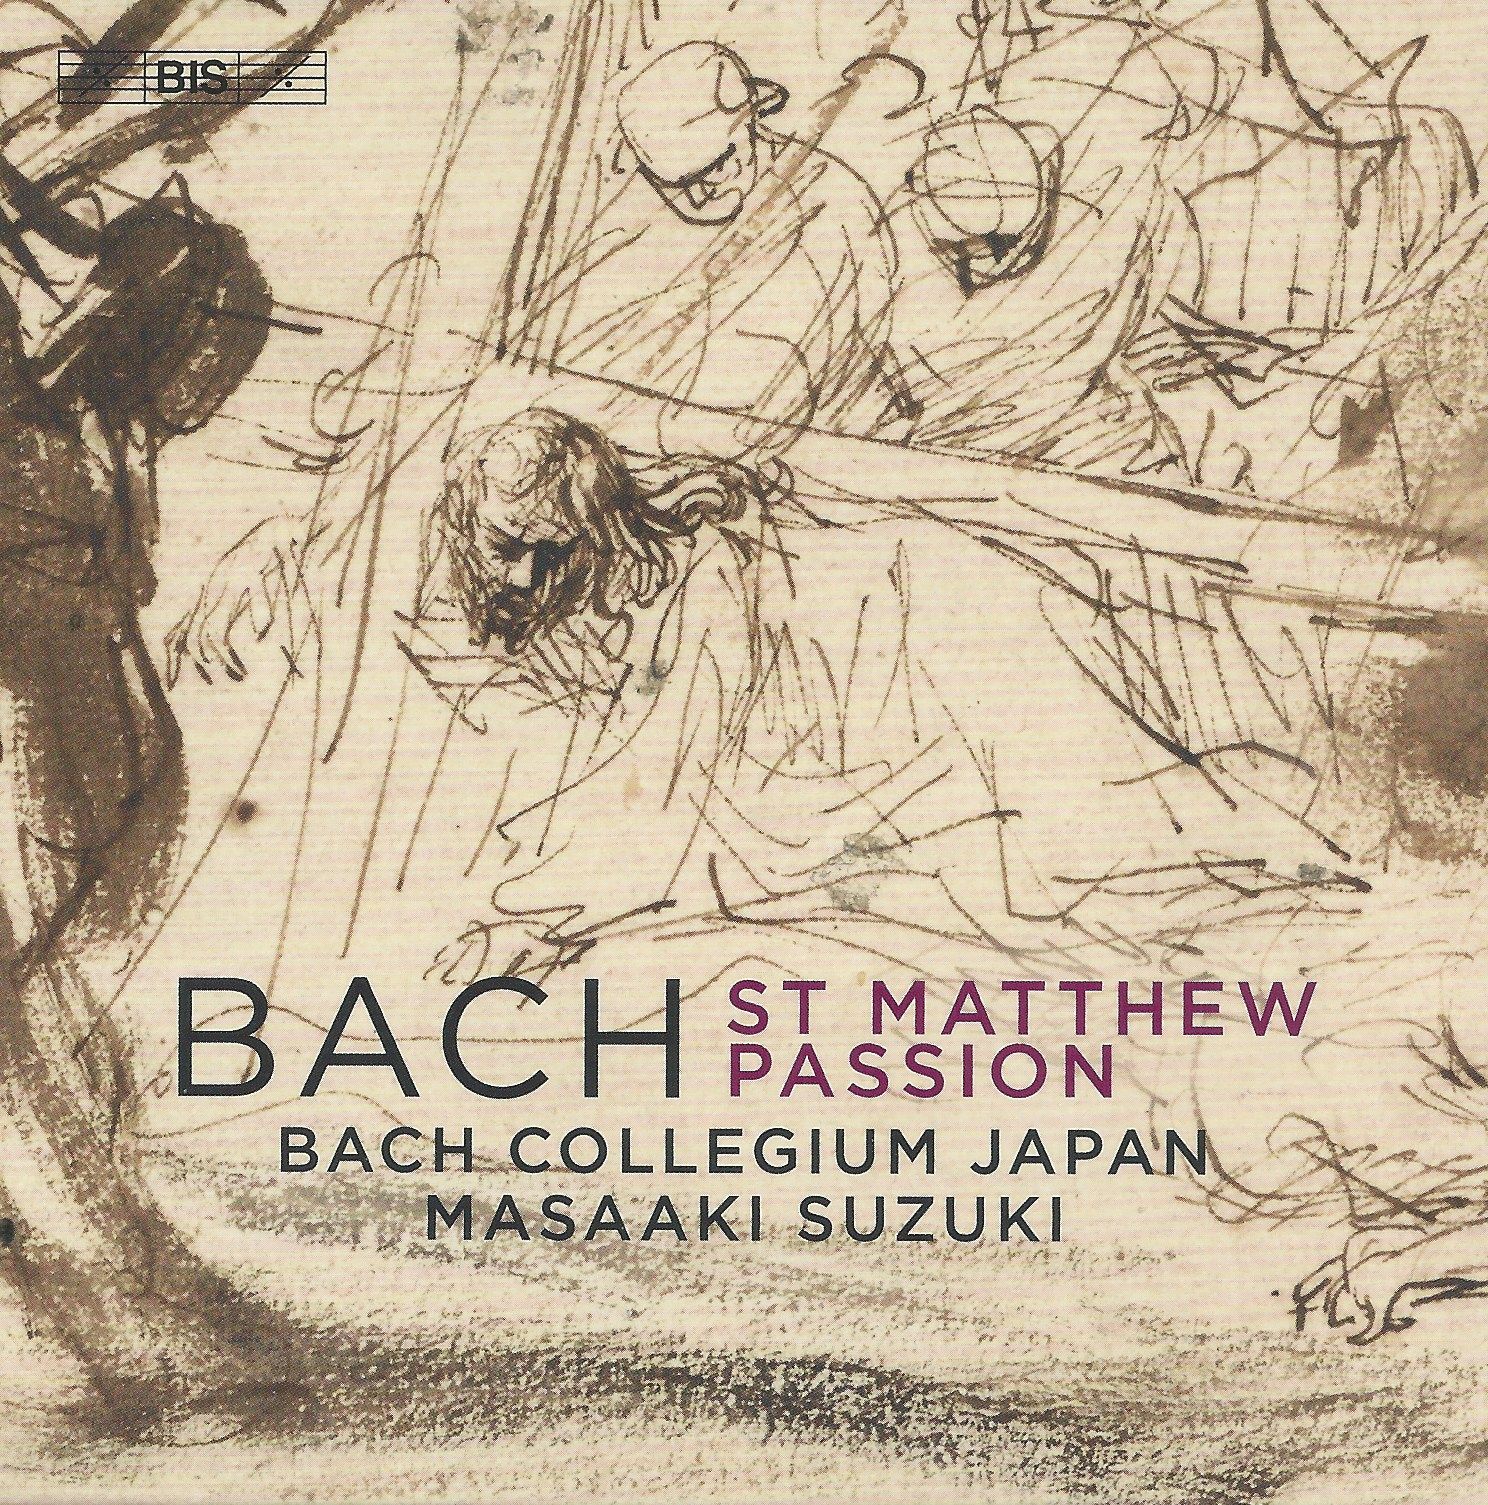 Masaaki Suzuki and Bach's St Matthew Passion